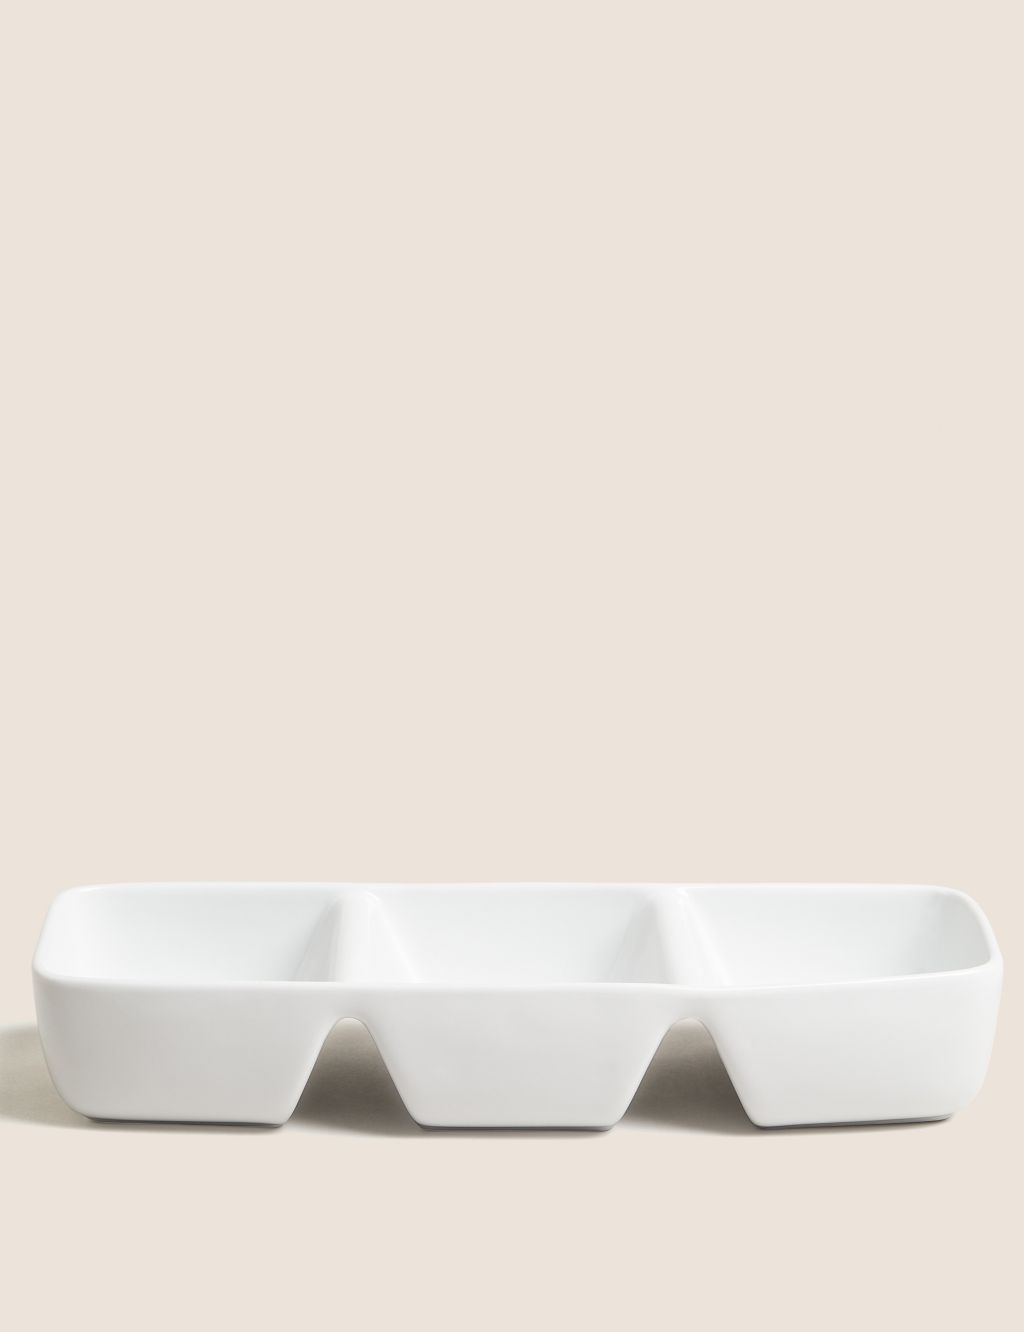 Maxim Porcelain Three Part Serving Bowl